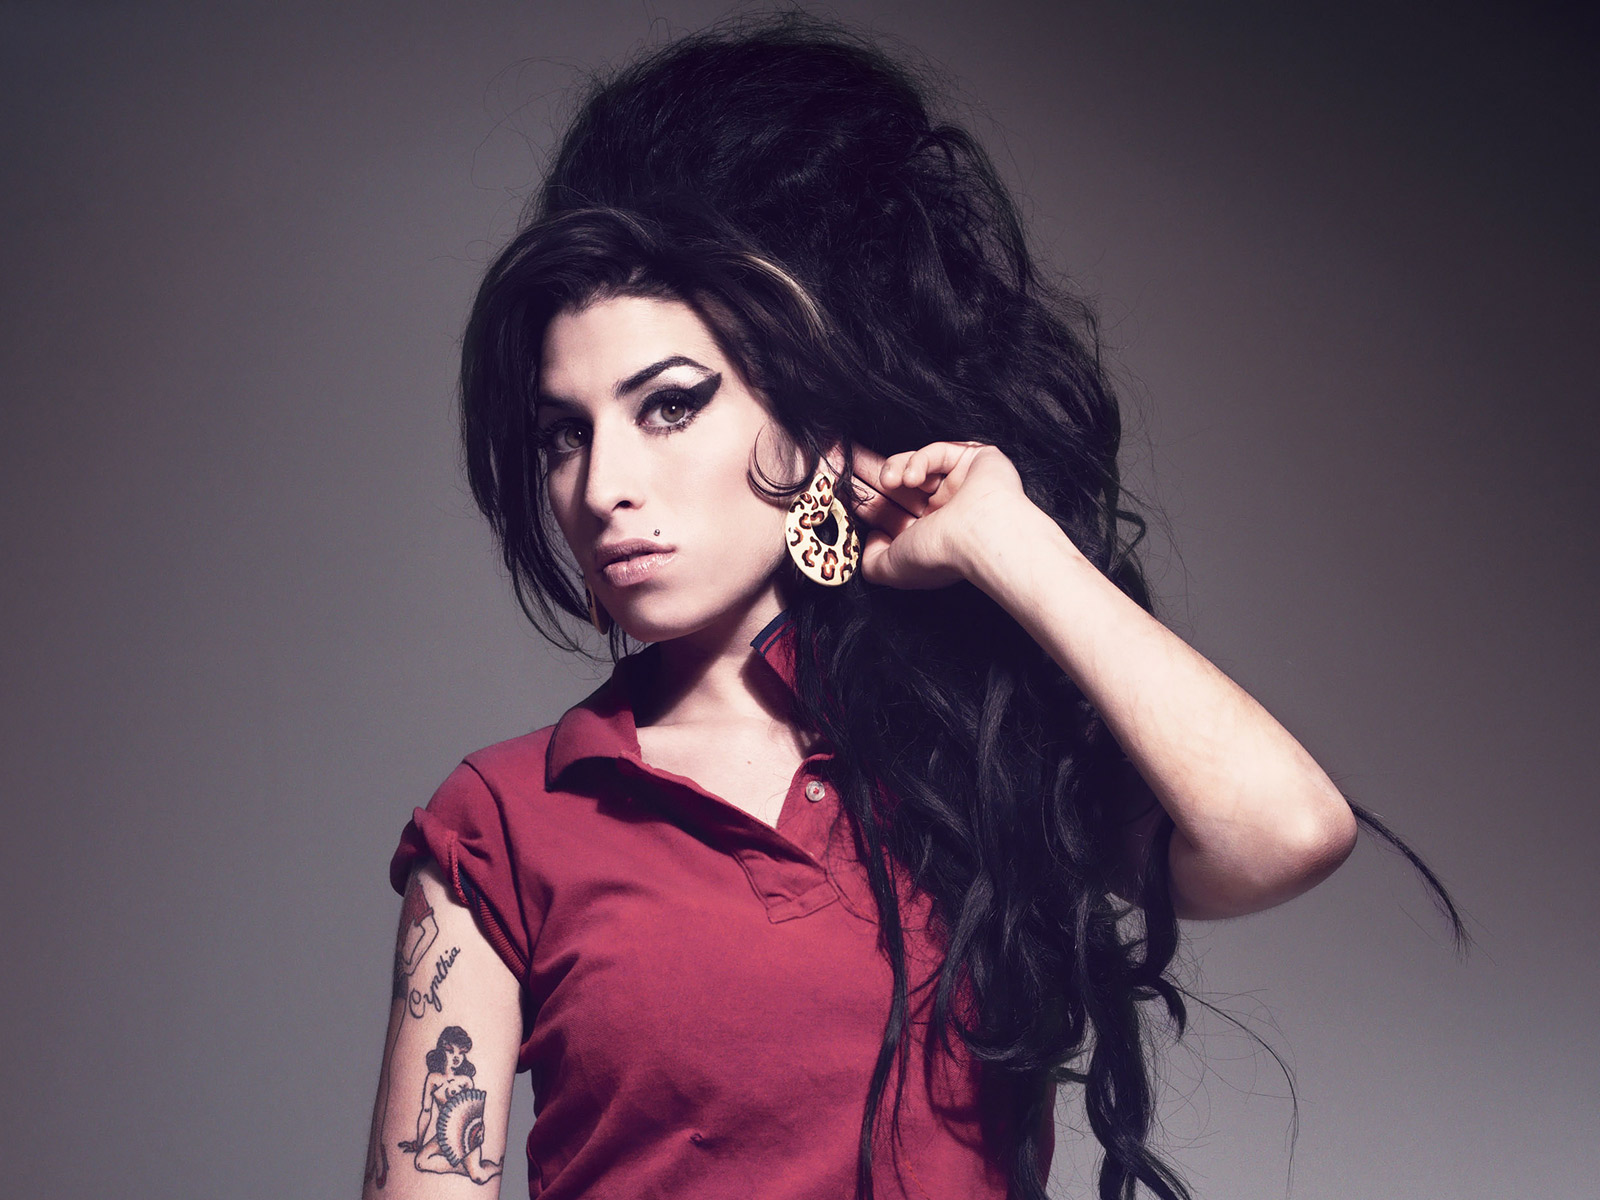 http://4.bp.blogspot.com/-_tCnbCyA6Tg/Ti0rvOYJxmI/AAAAAAAABgo/XA6tvAgqb18/s1600/Amy_Winehouse.jpg